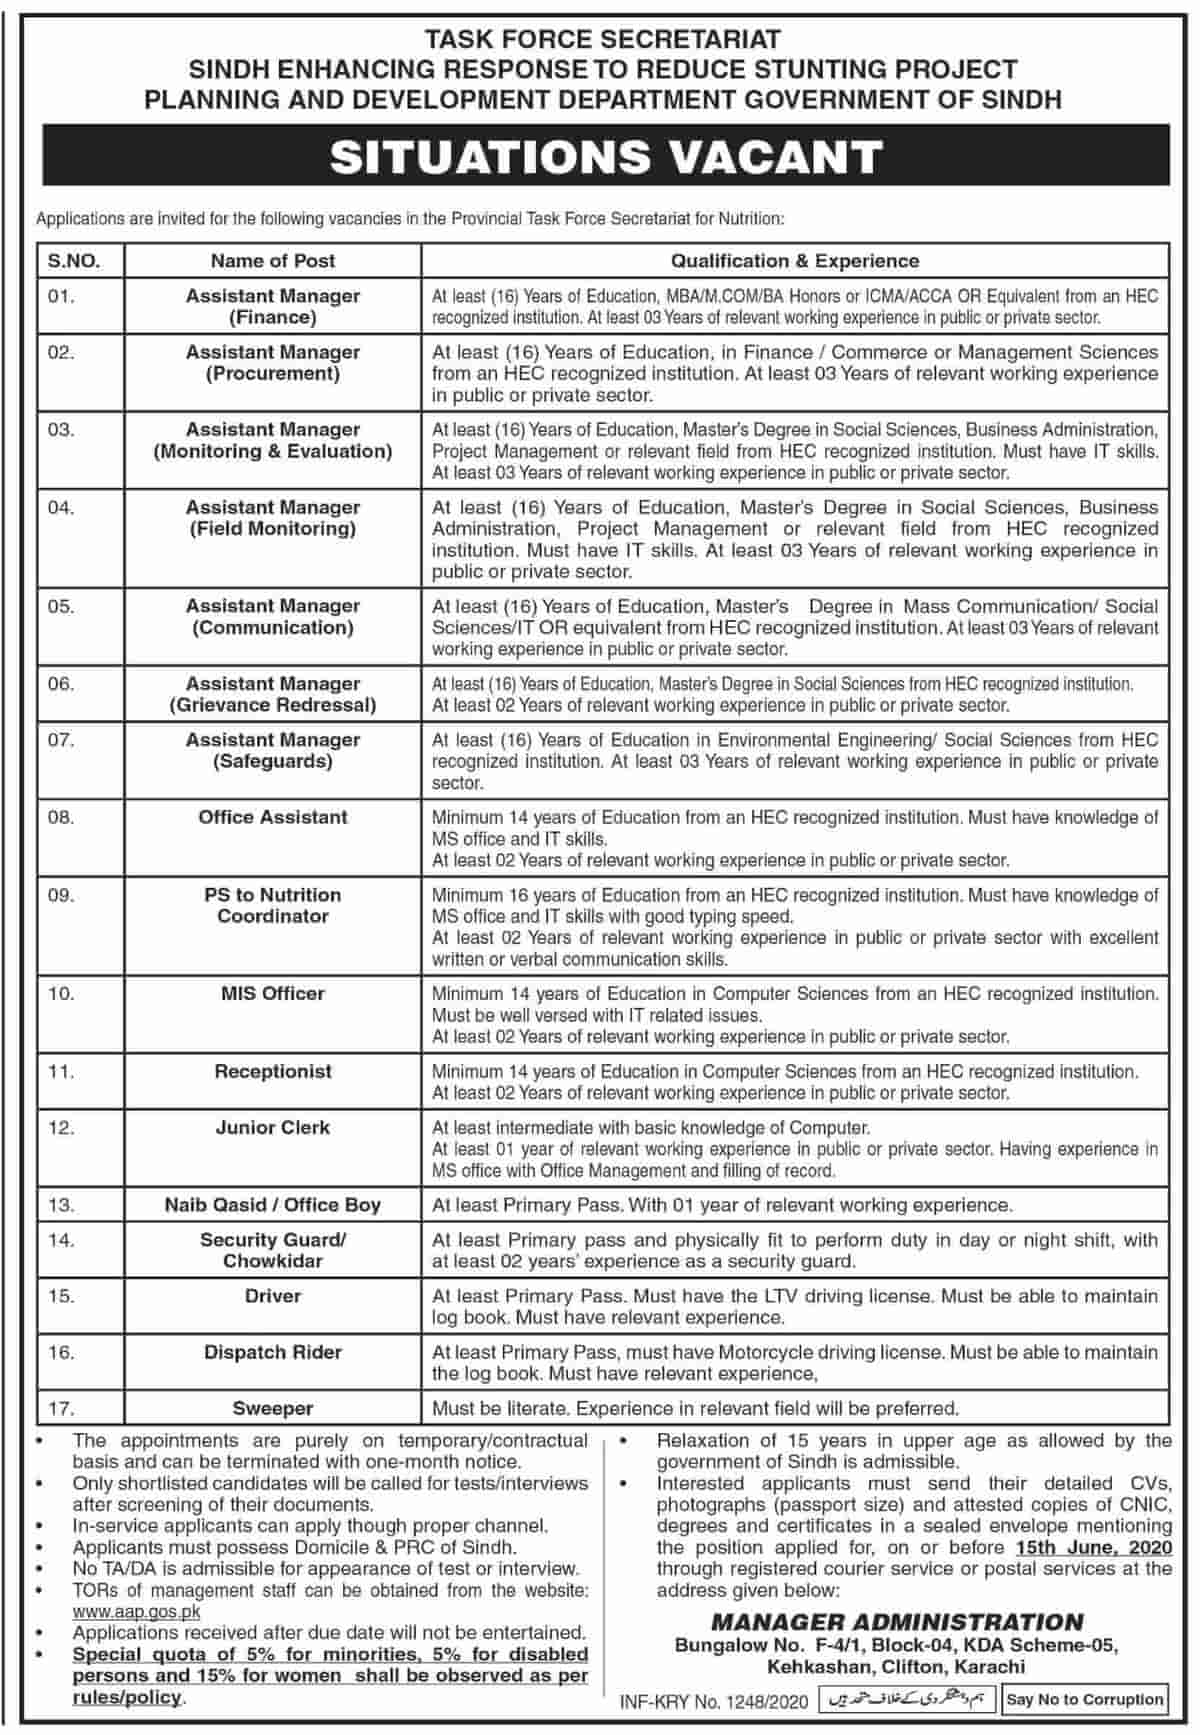 Sindh Government Task Force Secretariat Planning and Development Department Jobs 2020